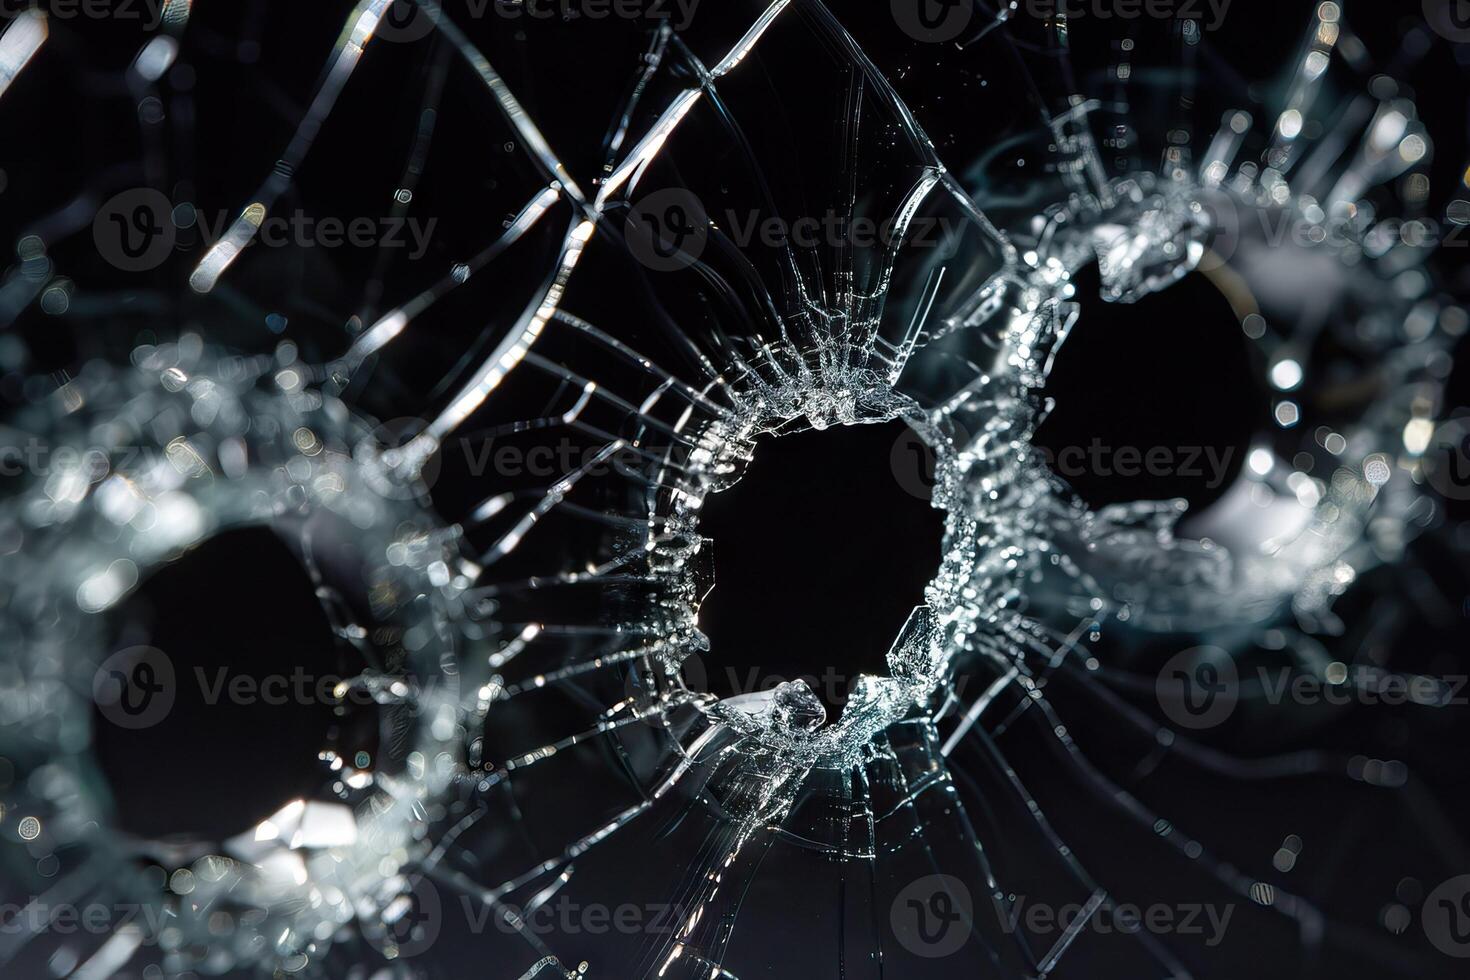 kogel gaten in glas geïsoleerd Aan zwart kogel gaten van .40 handgeweer detailopname kogel gaten foto